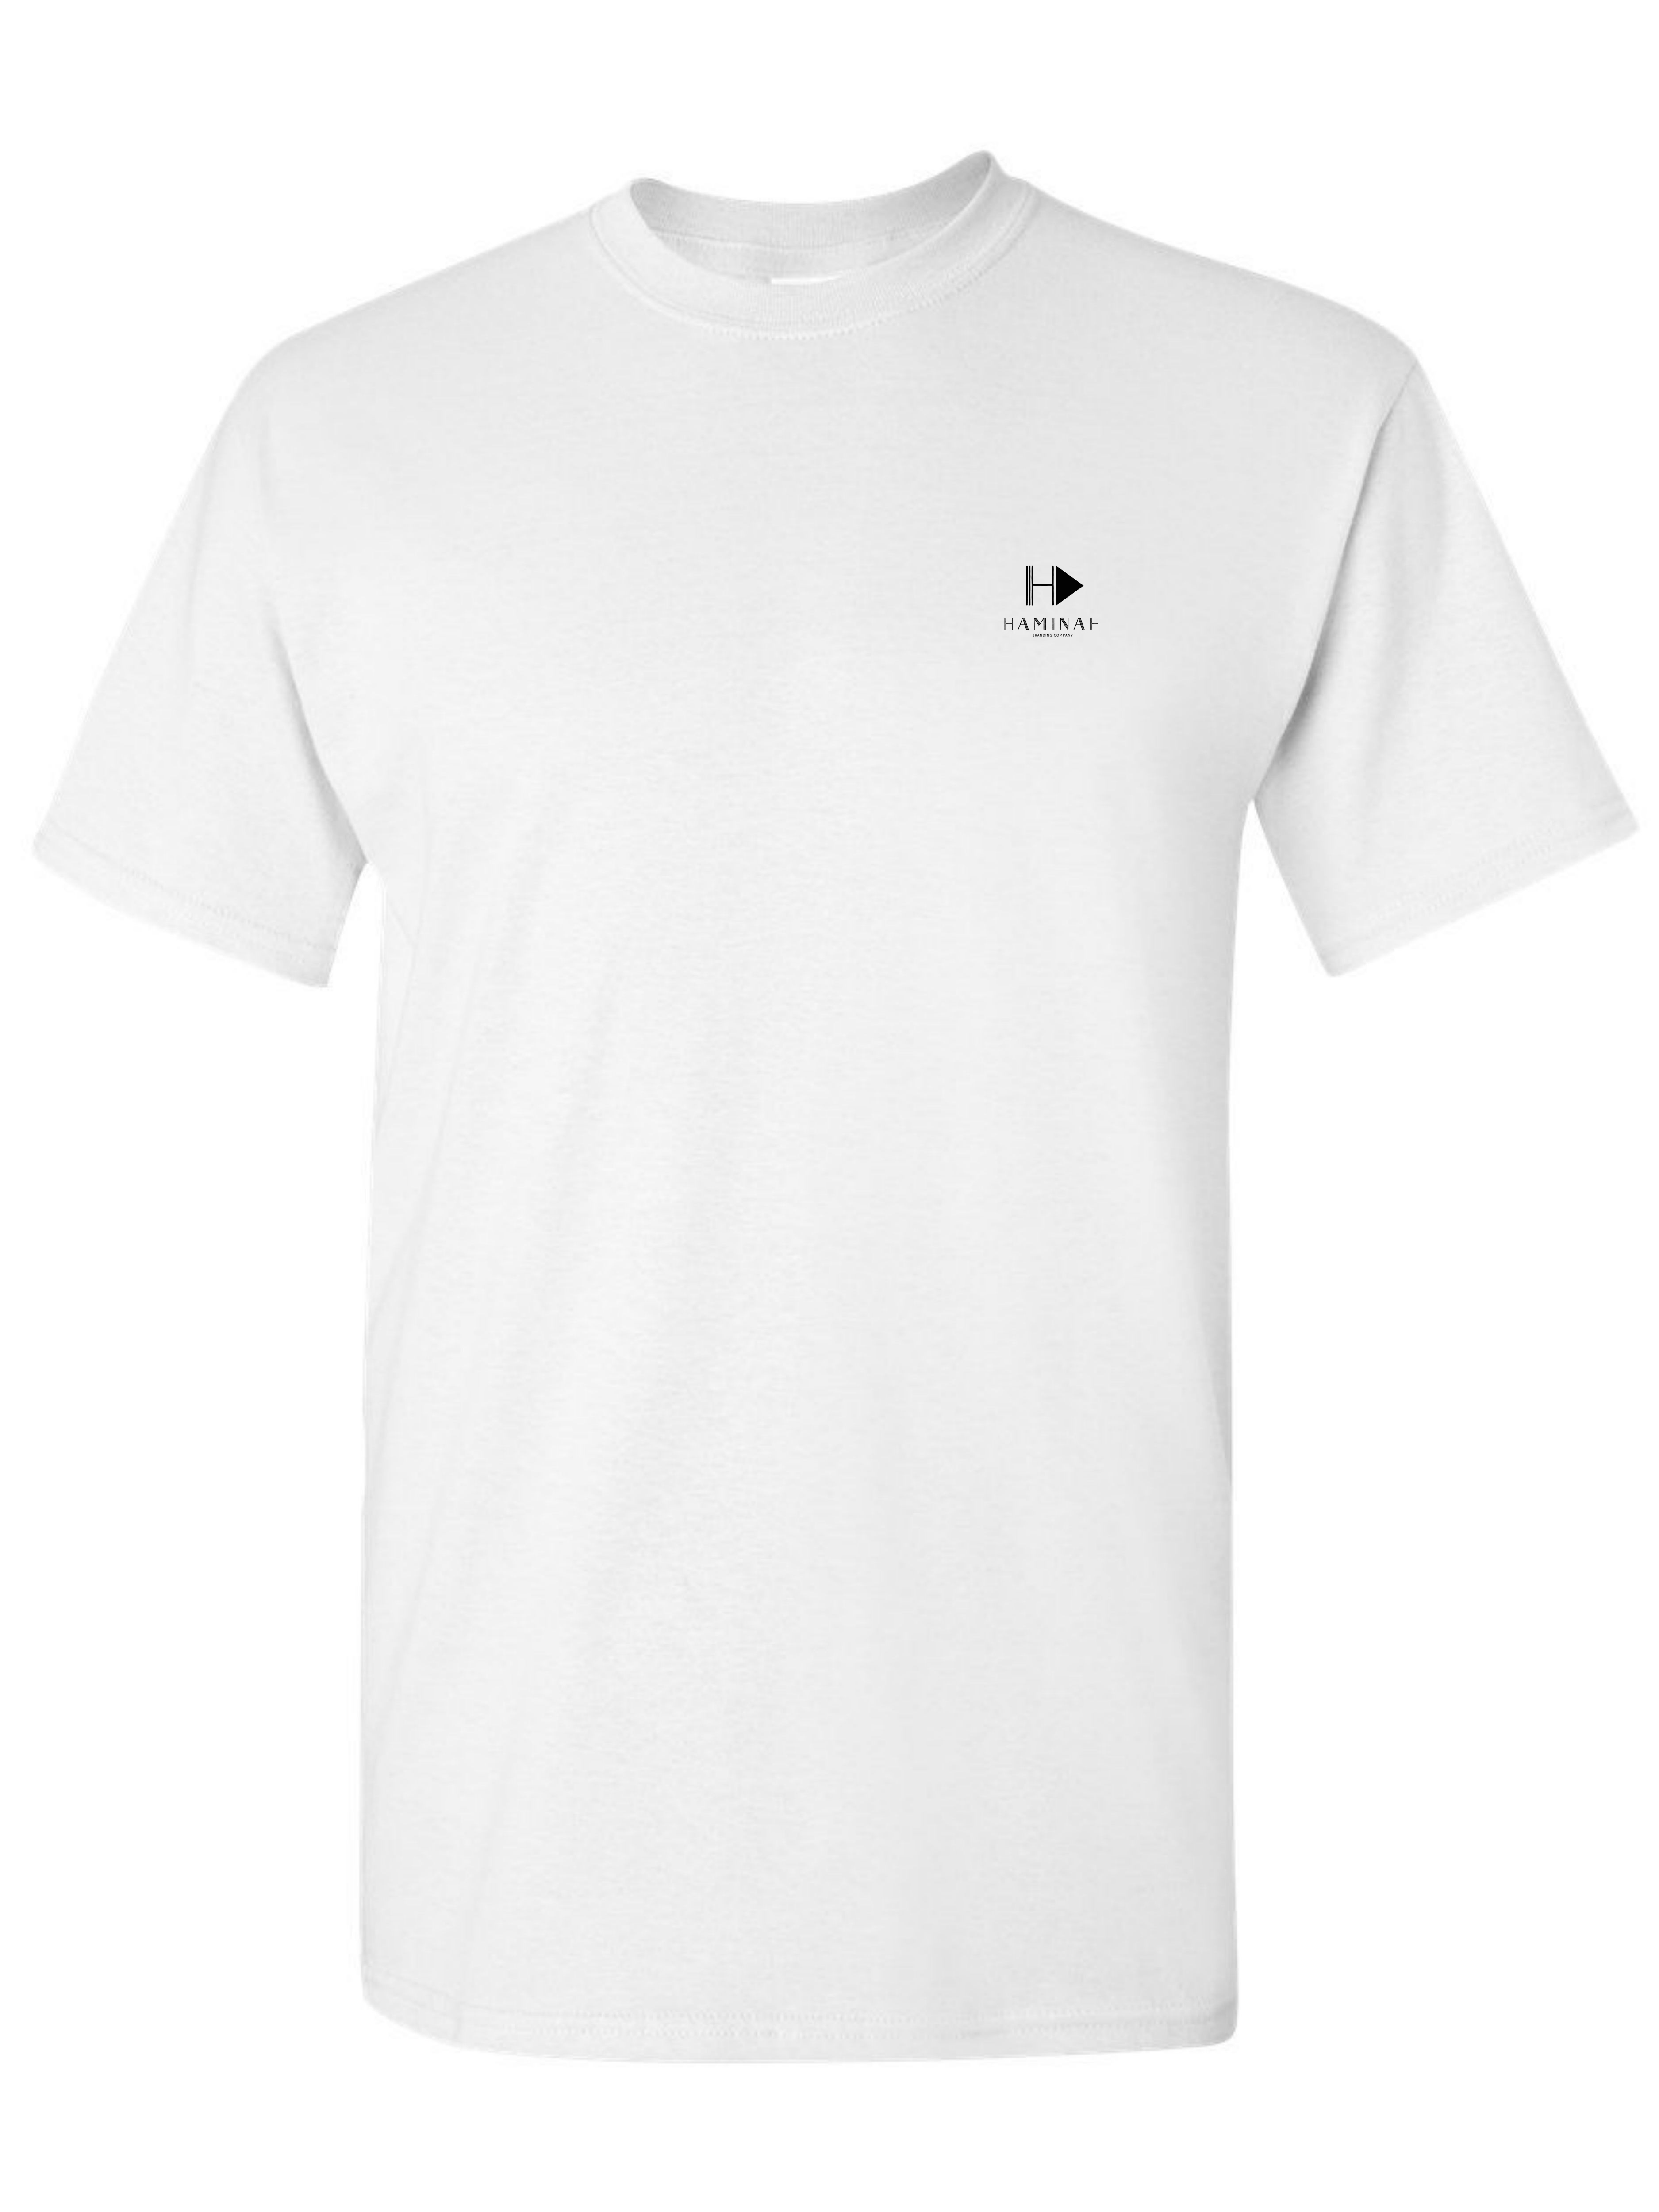 Arrow Chest Print, Men's Short Sleeve T-shirt, Casual Comfy Tees